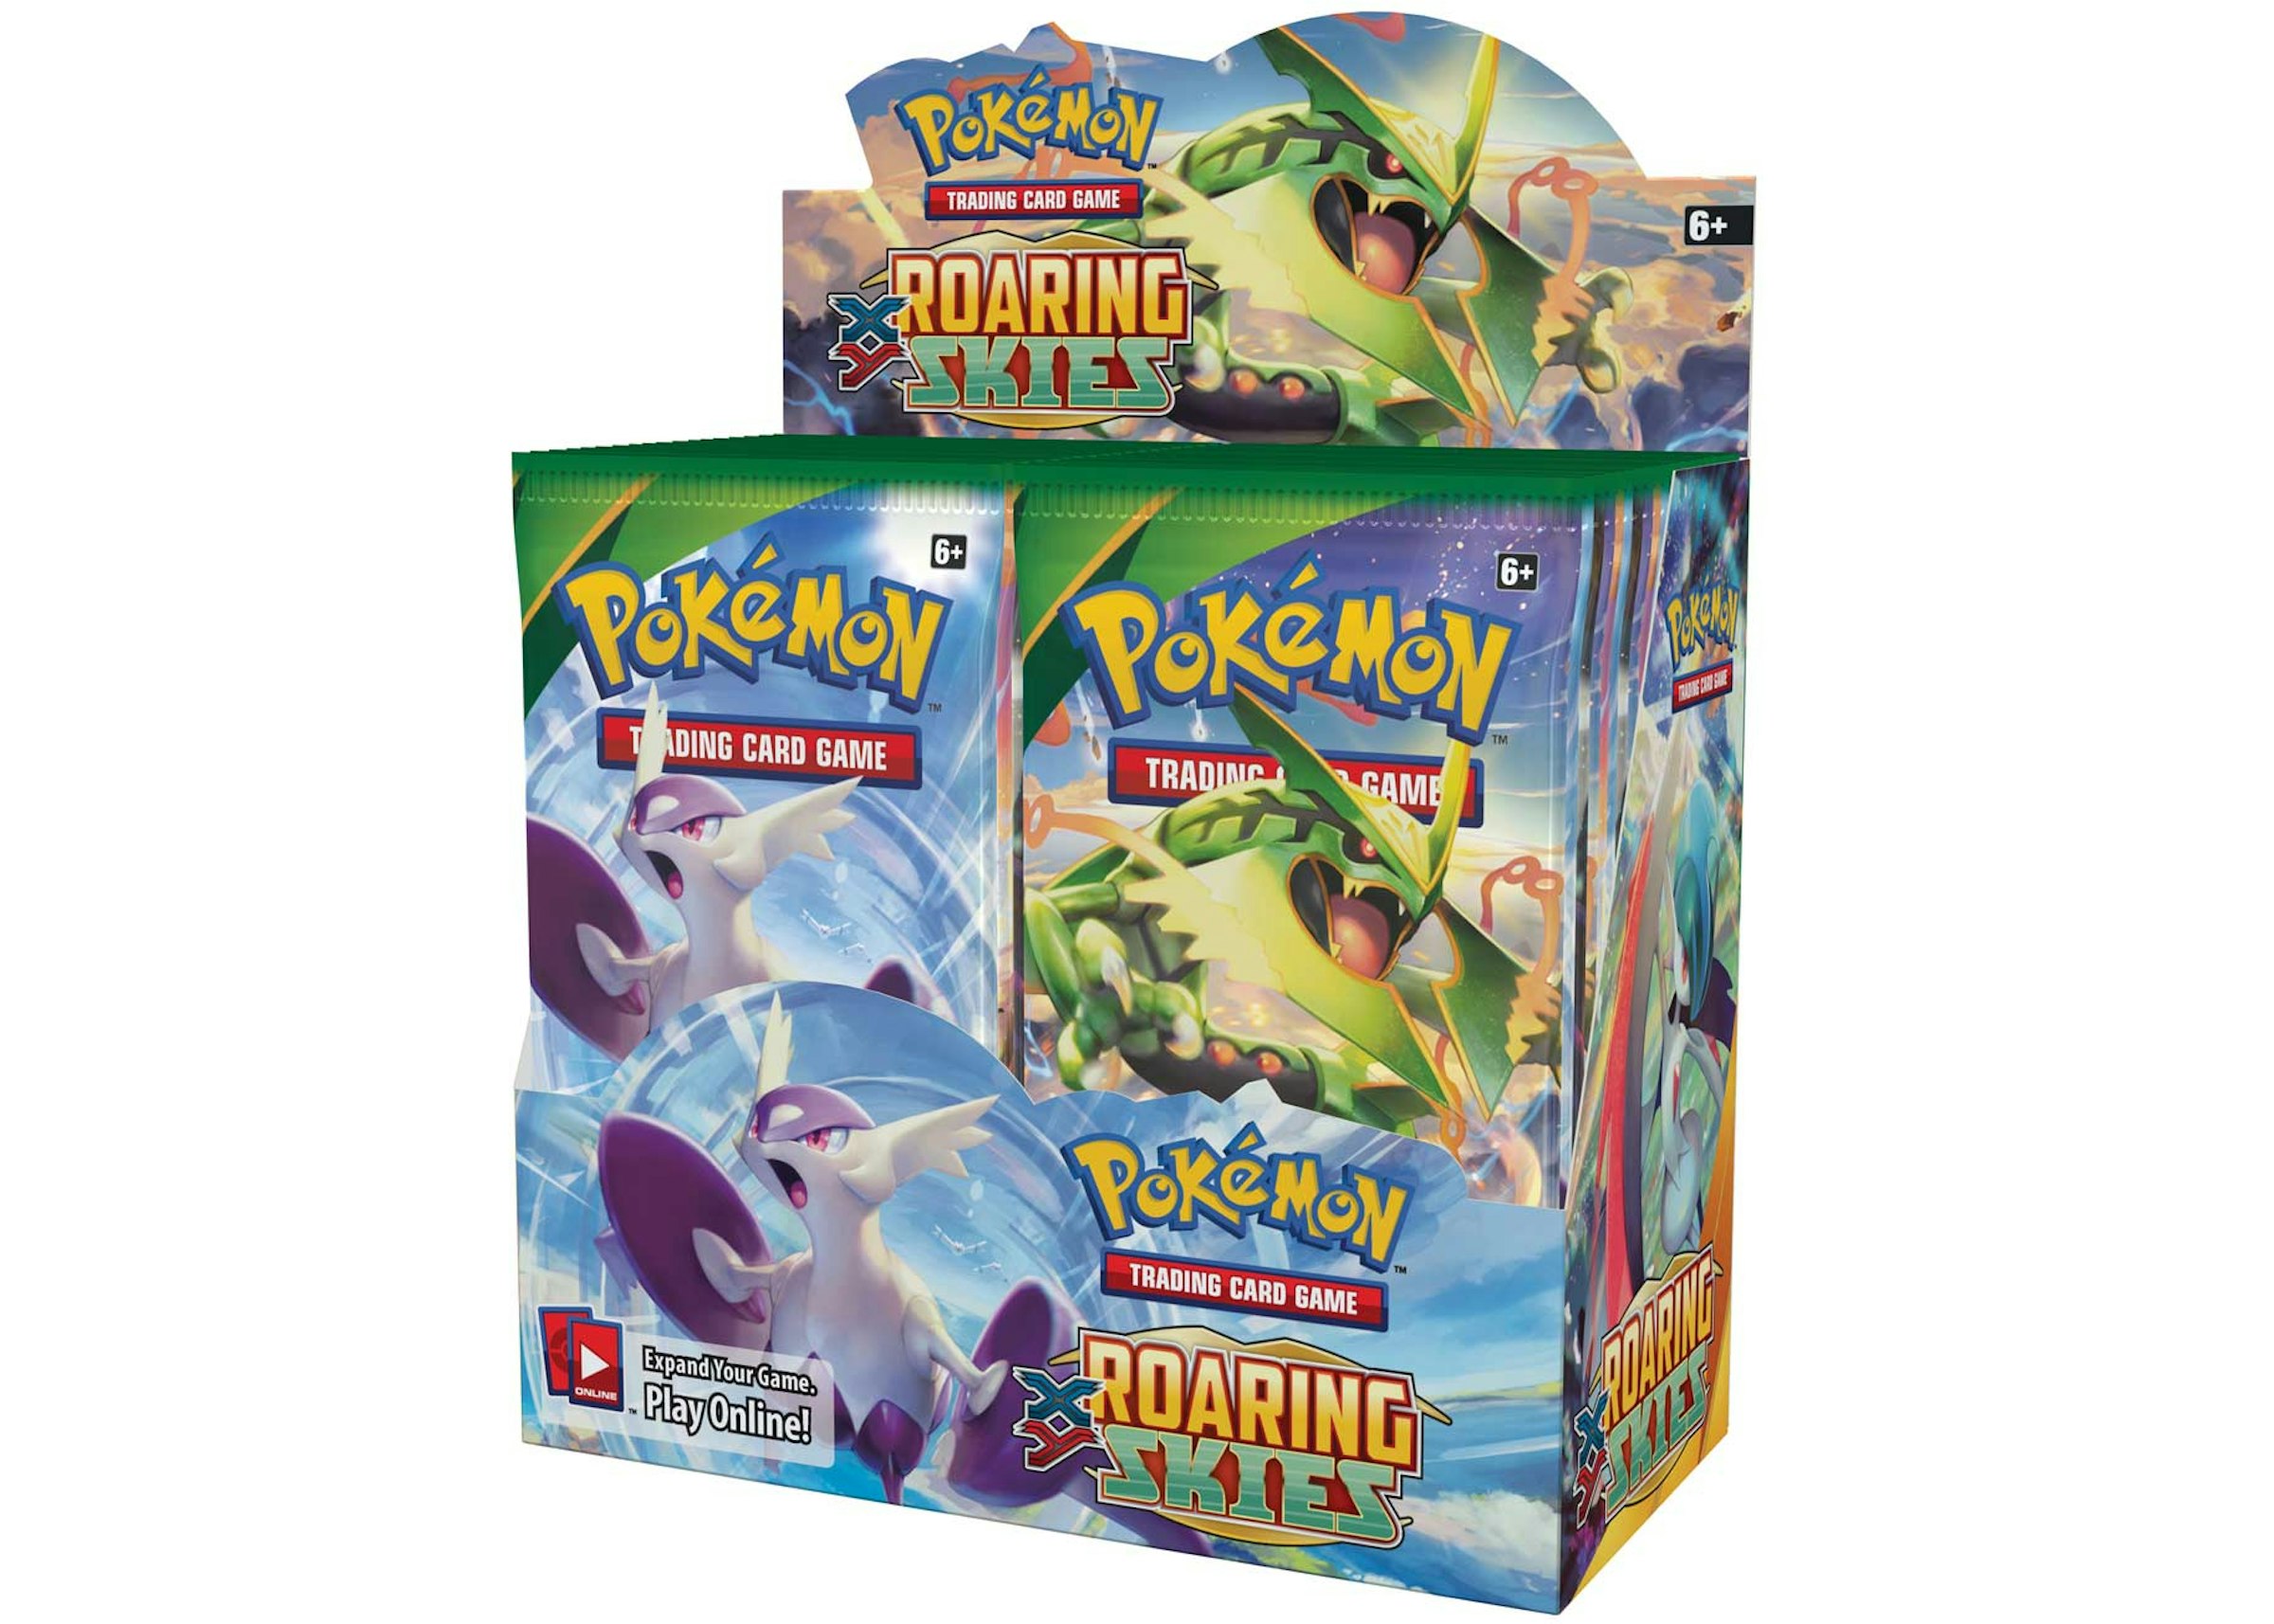 Pokémon TCG XY Roaring Box US